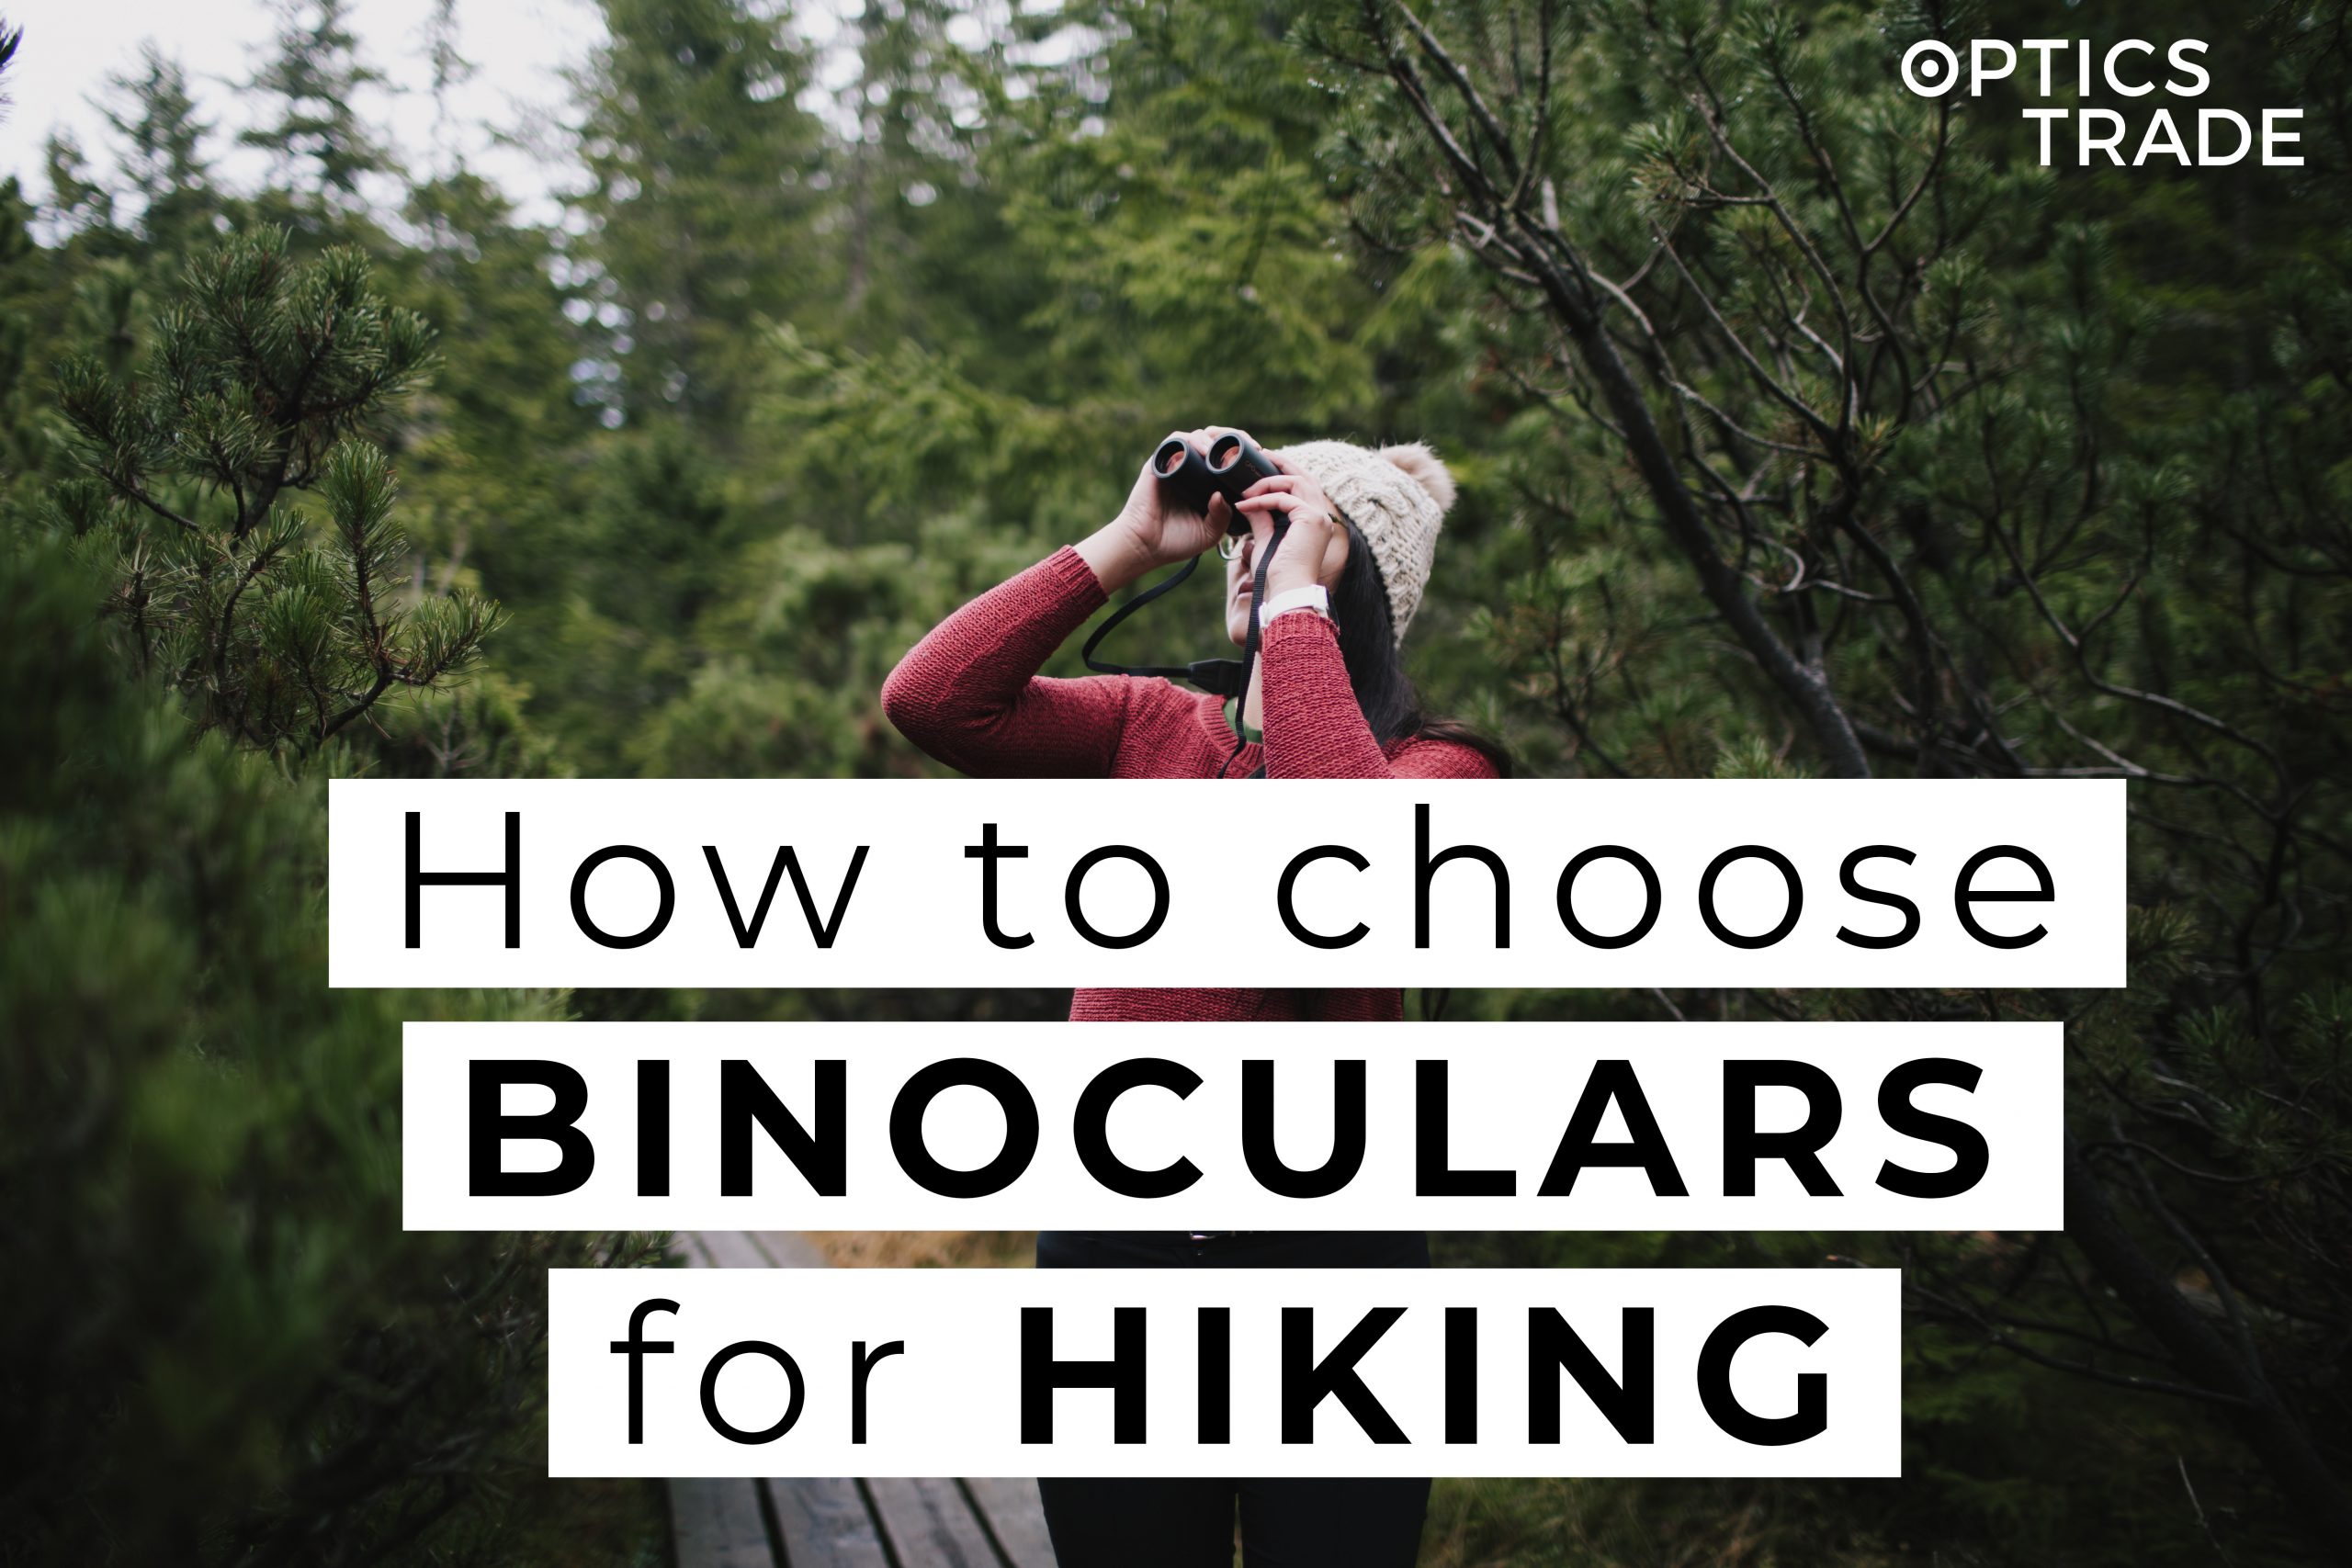 How to choose binoculars for hiking